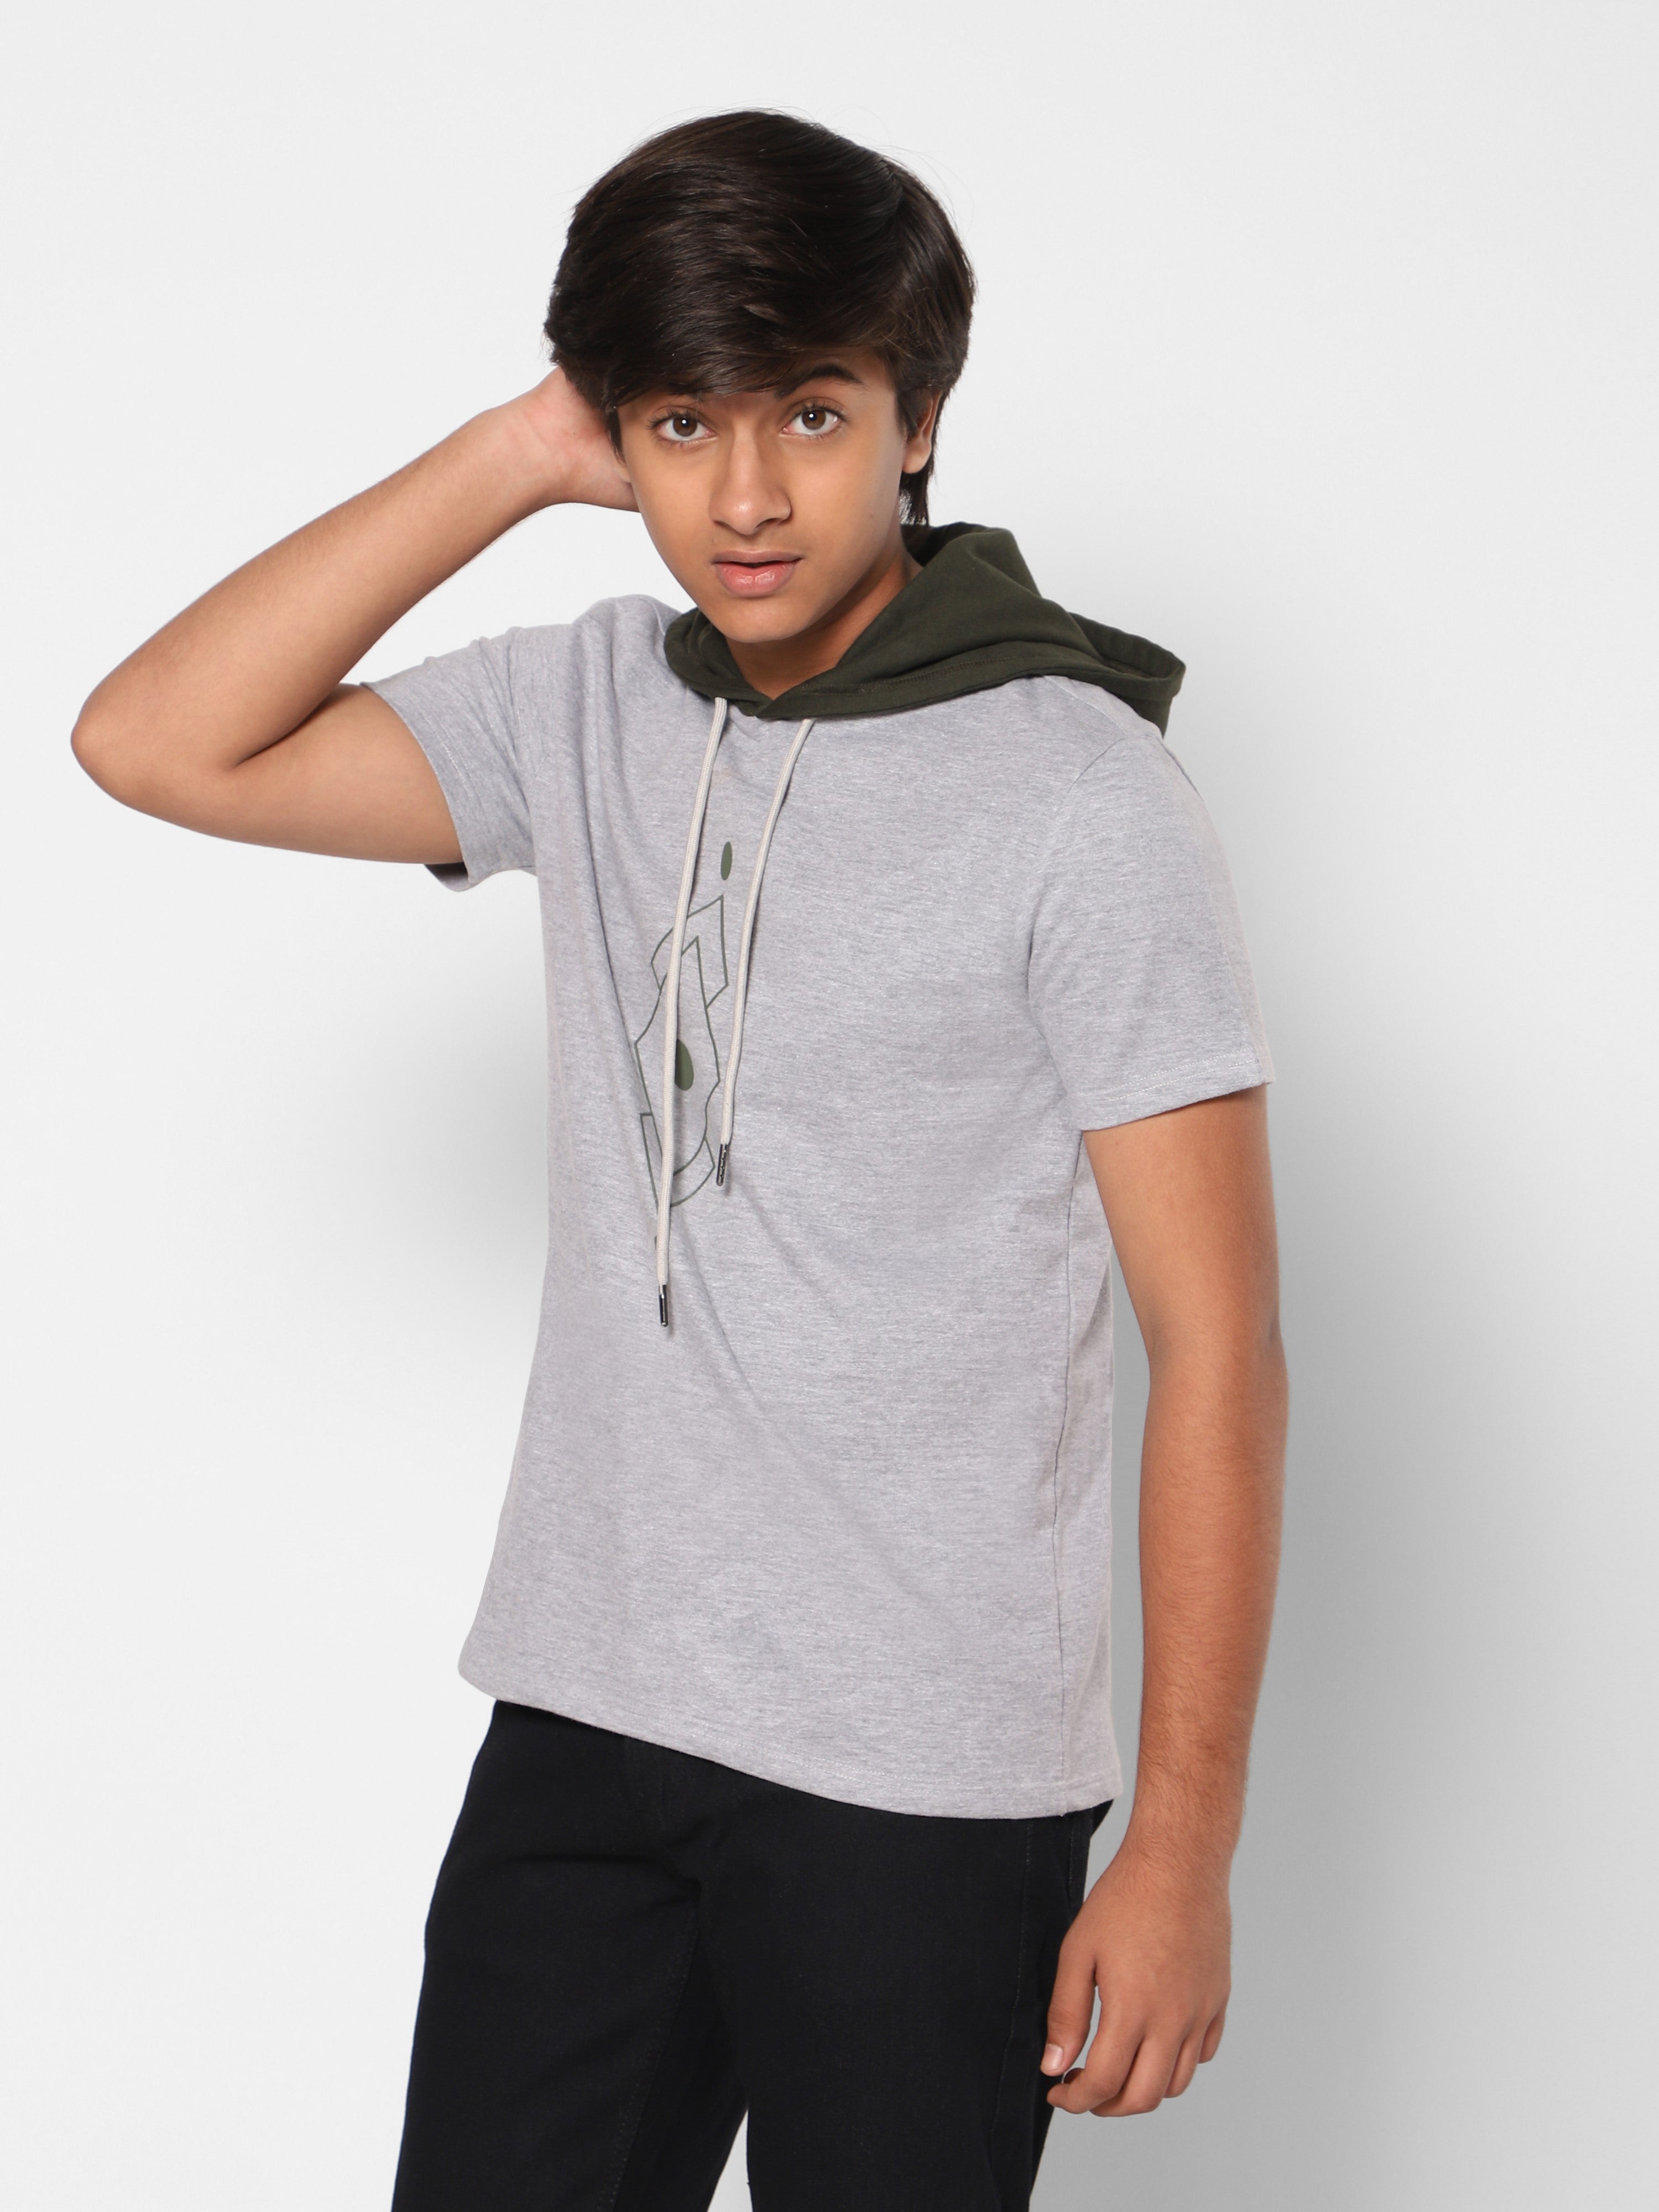 TeenTrums Regular Boys Fashion T-shirt with hoodie - Geometric art - Ecru & olive